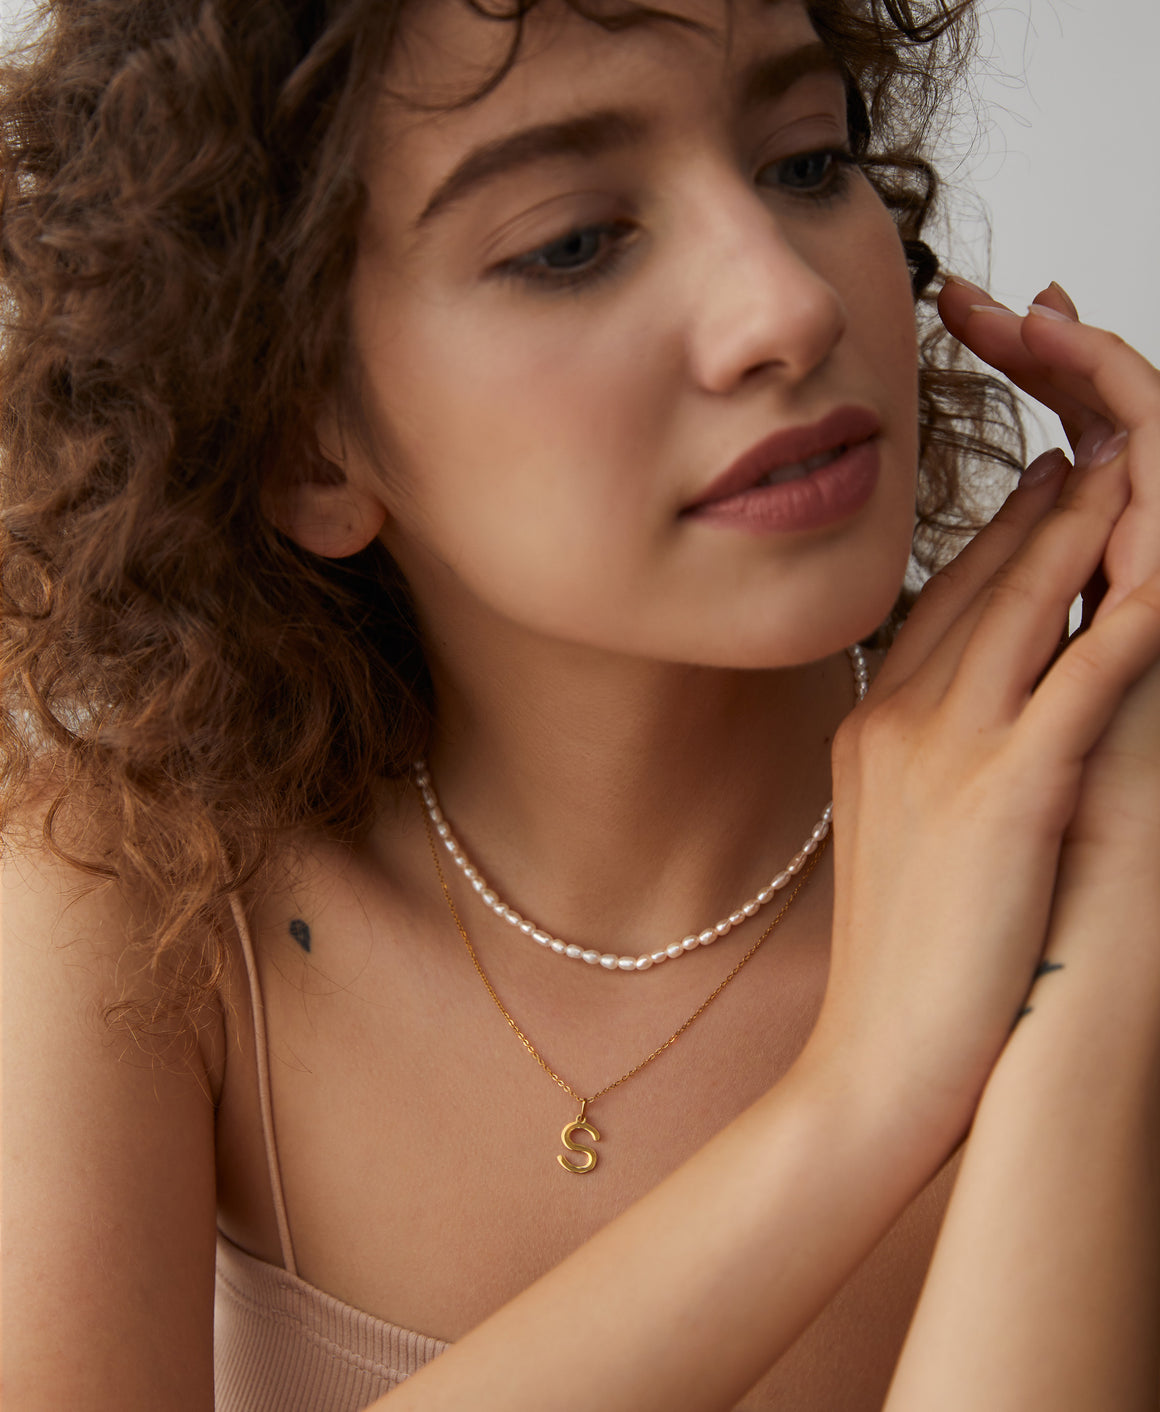 Mini Süßwasserperlen Halskette - Perlenkette - Perlen Choker - 925er Sterling Silber - Gold - Silber - Roségold - Minimalistisch - K536